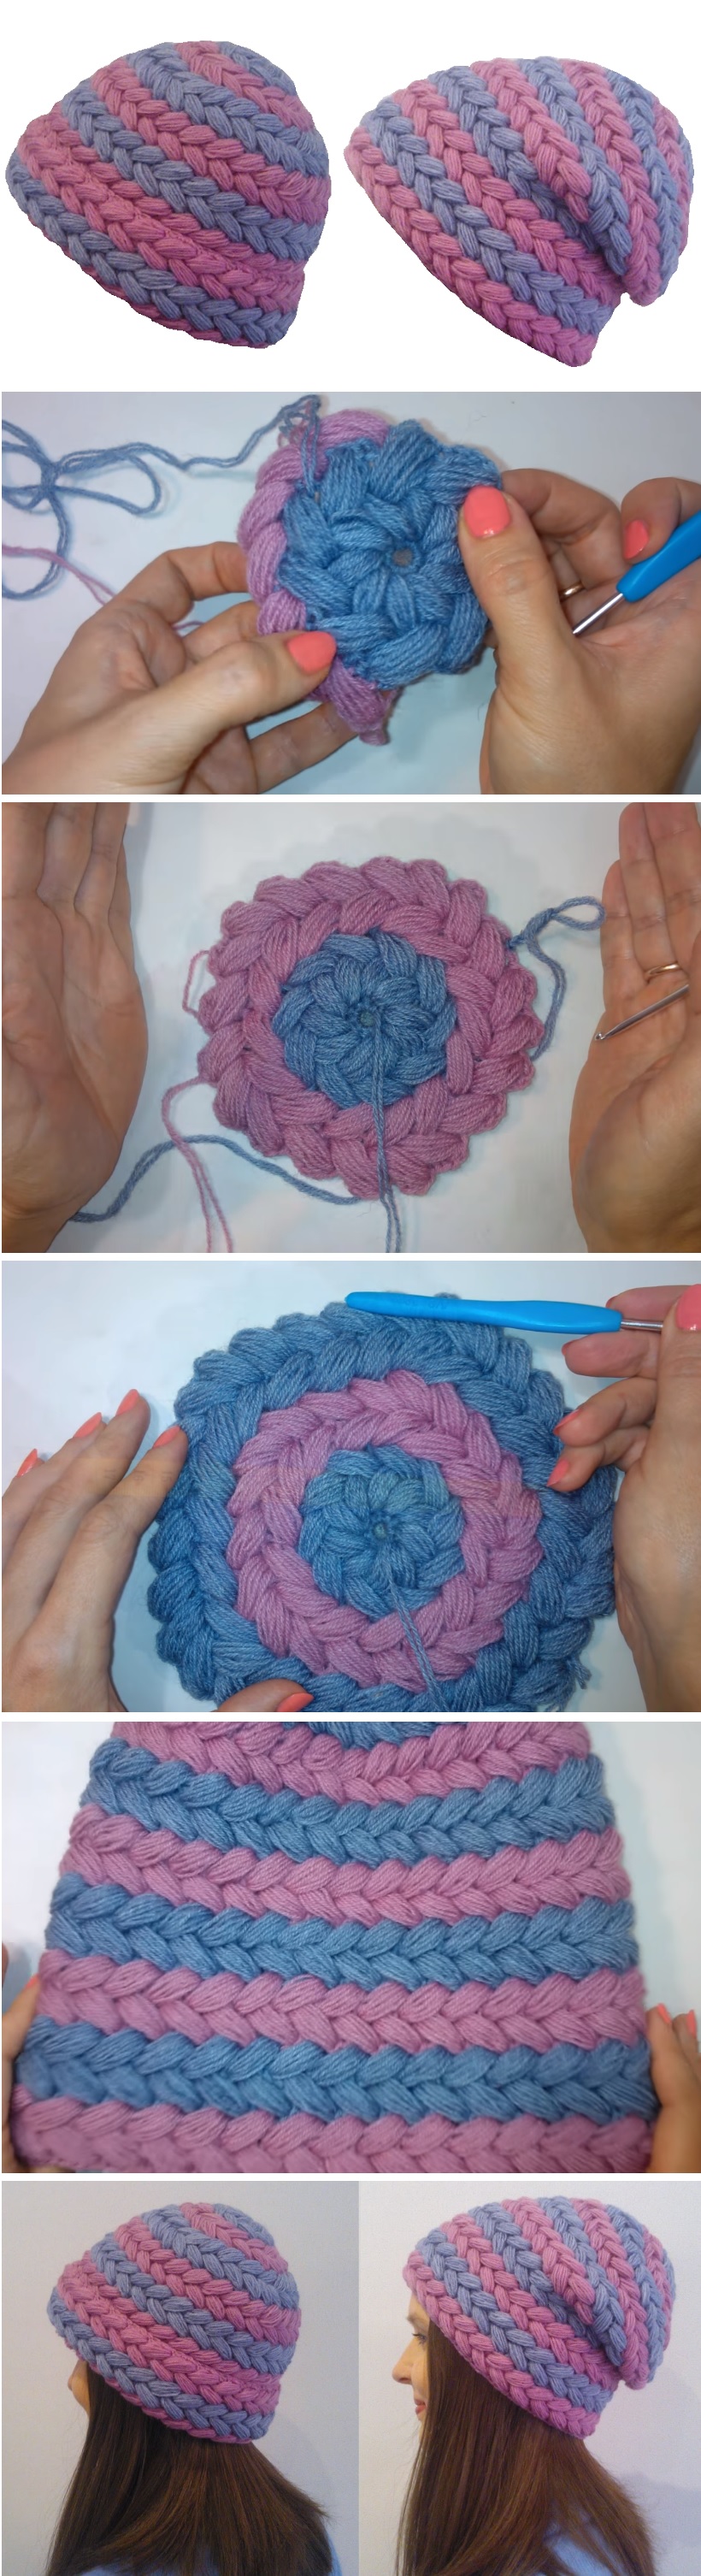 Crochet Puff Braid Hat